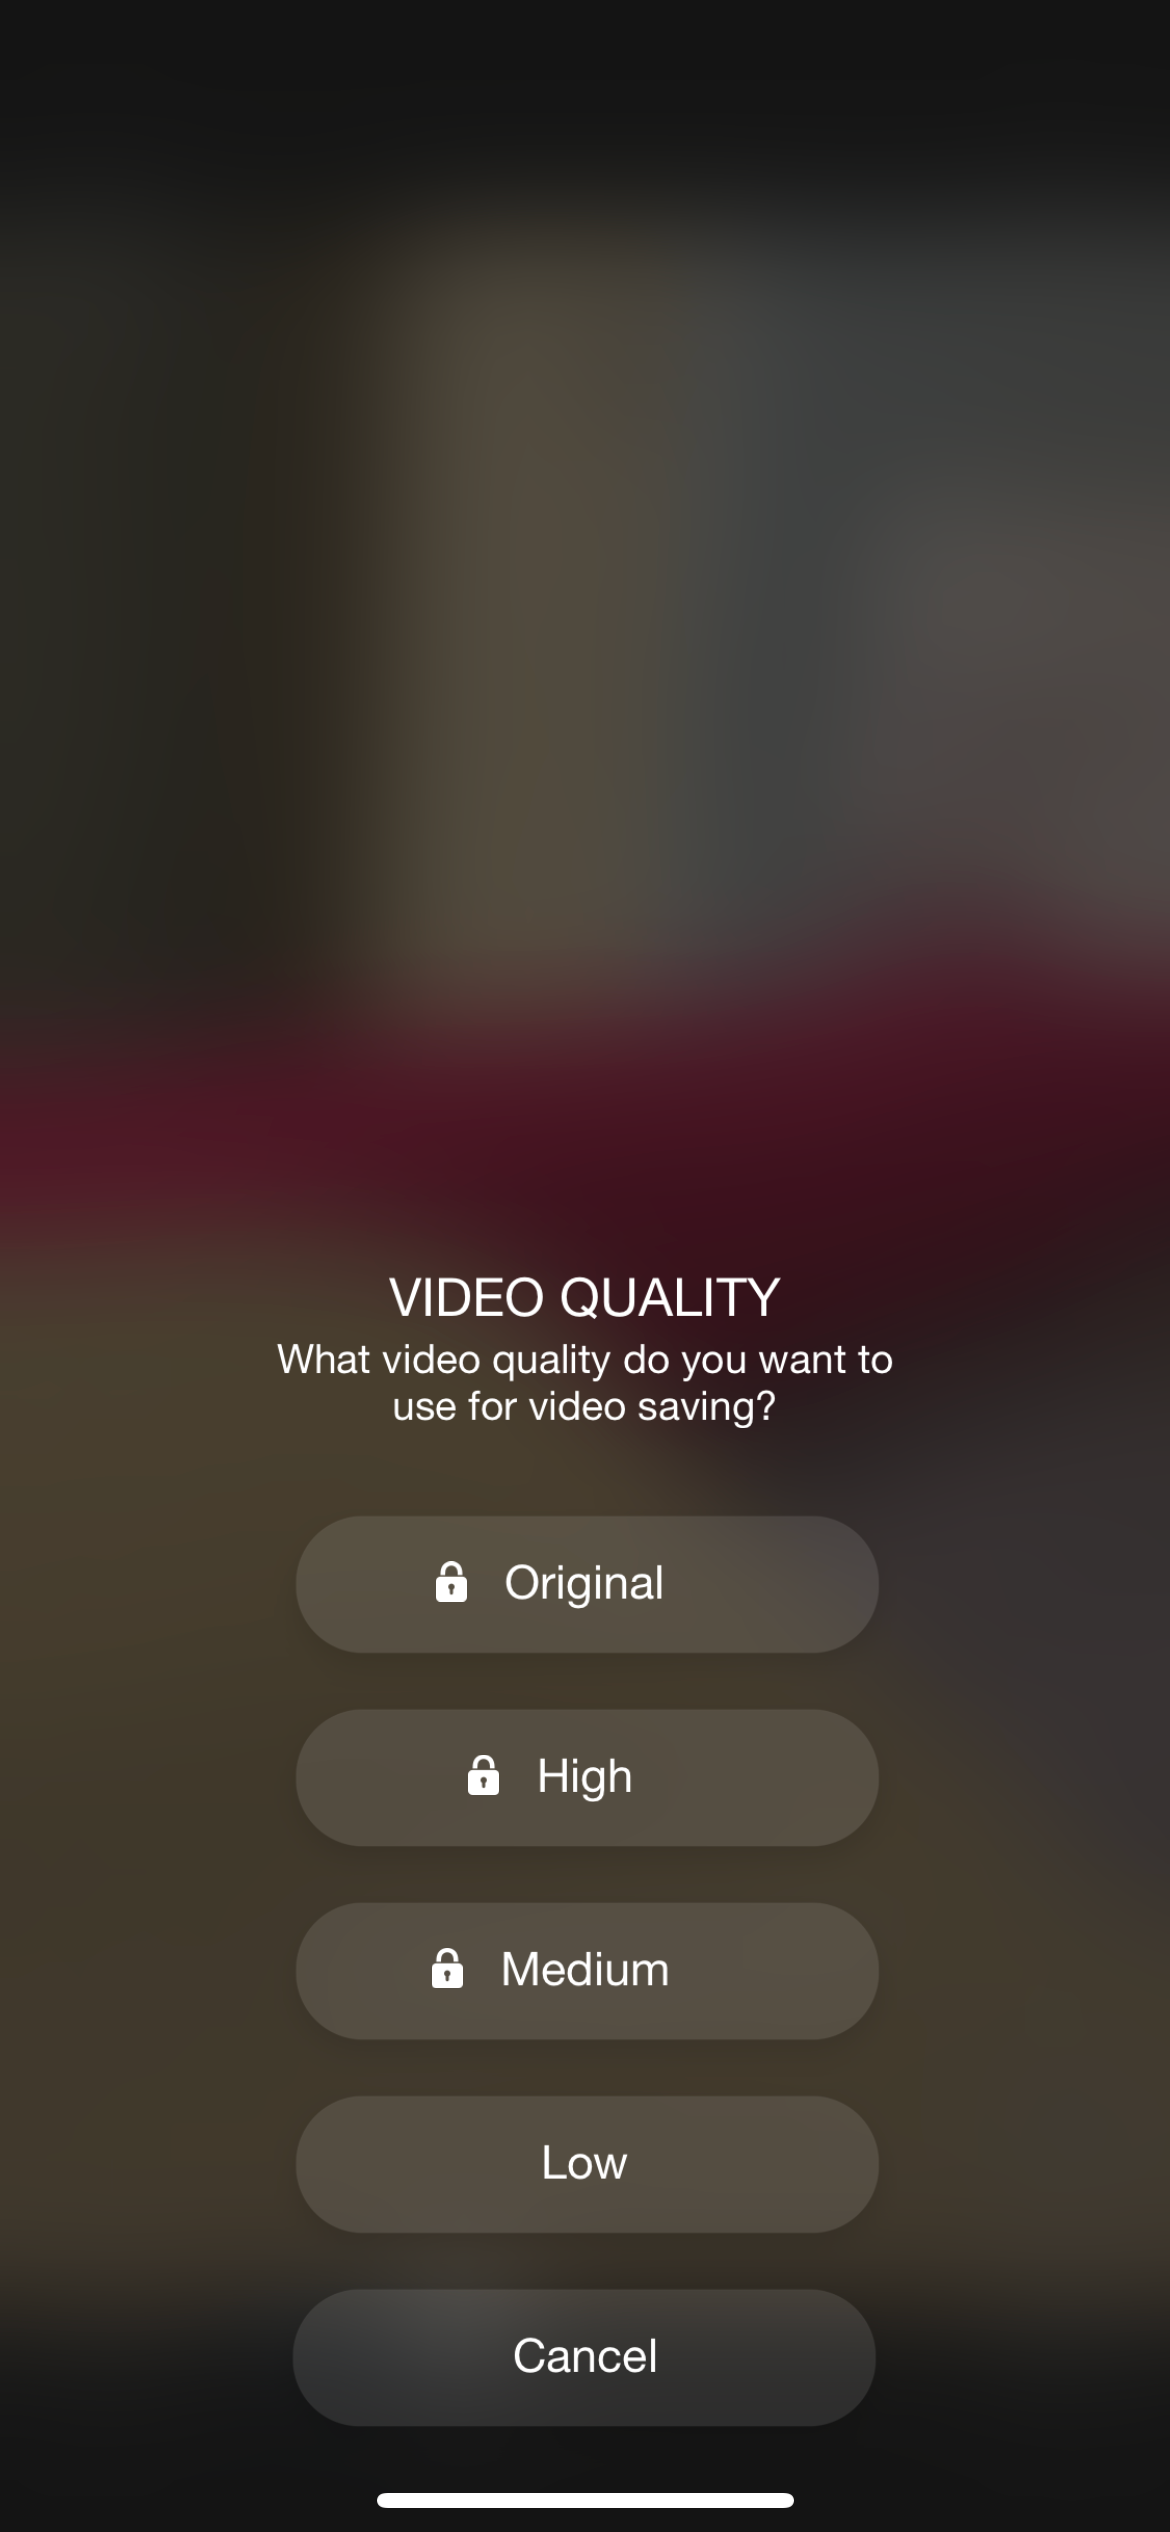 Pausecam video quality options